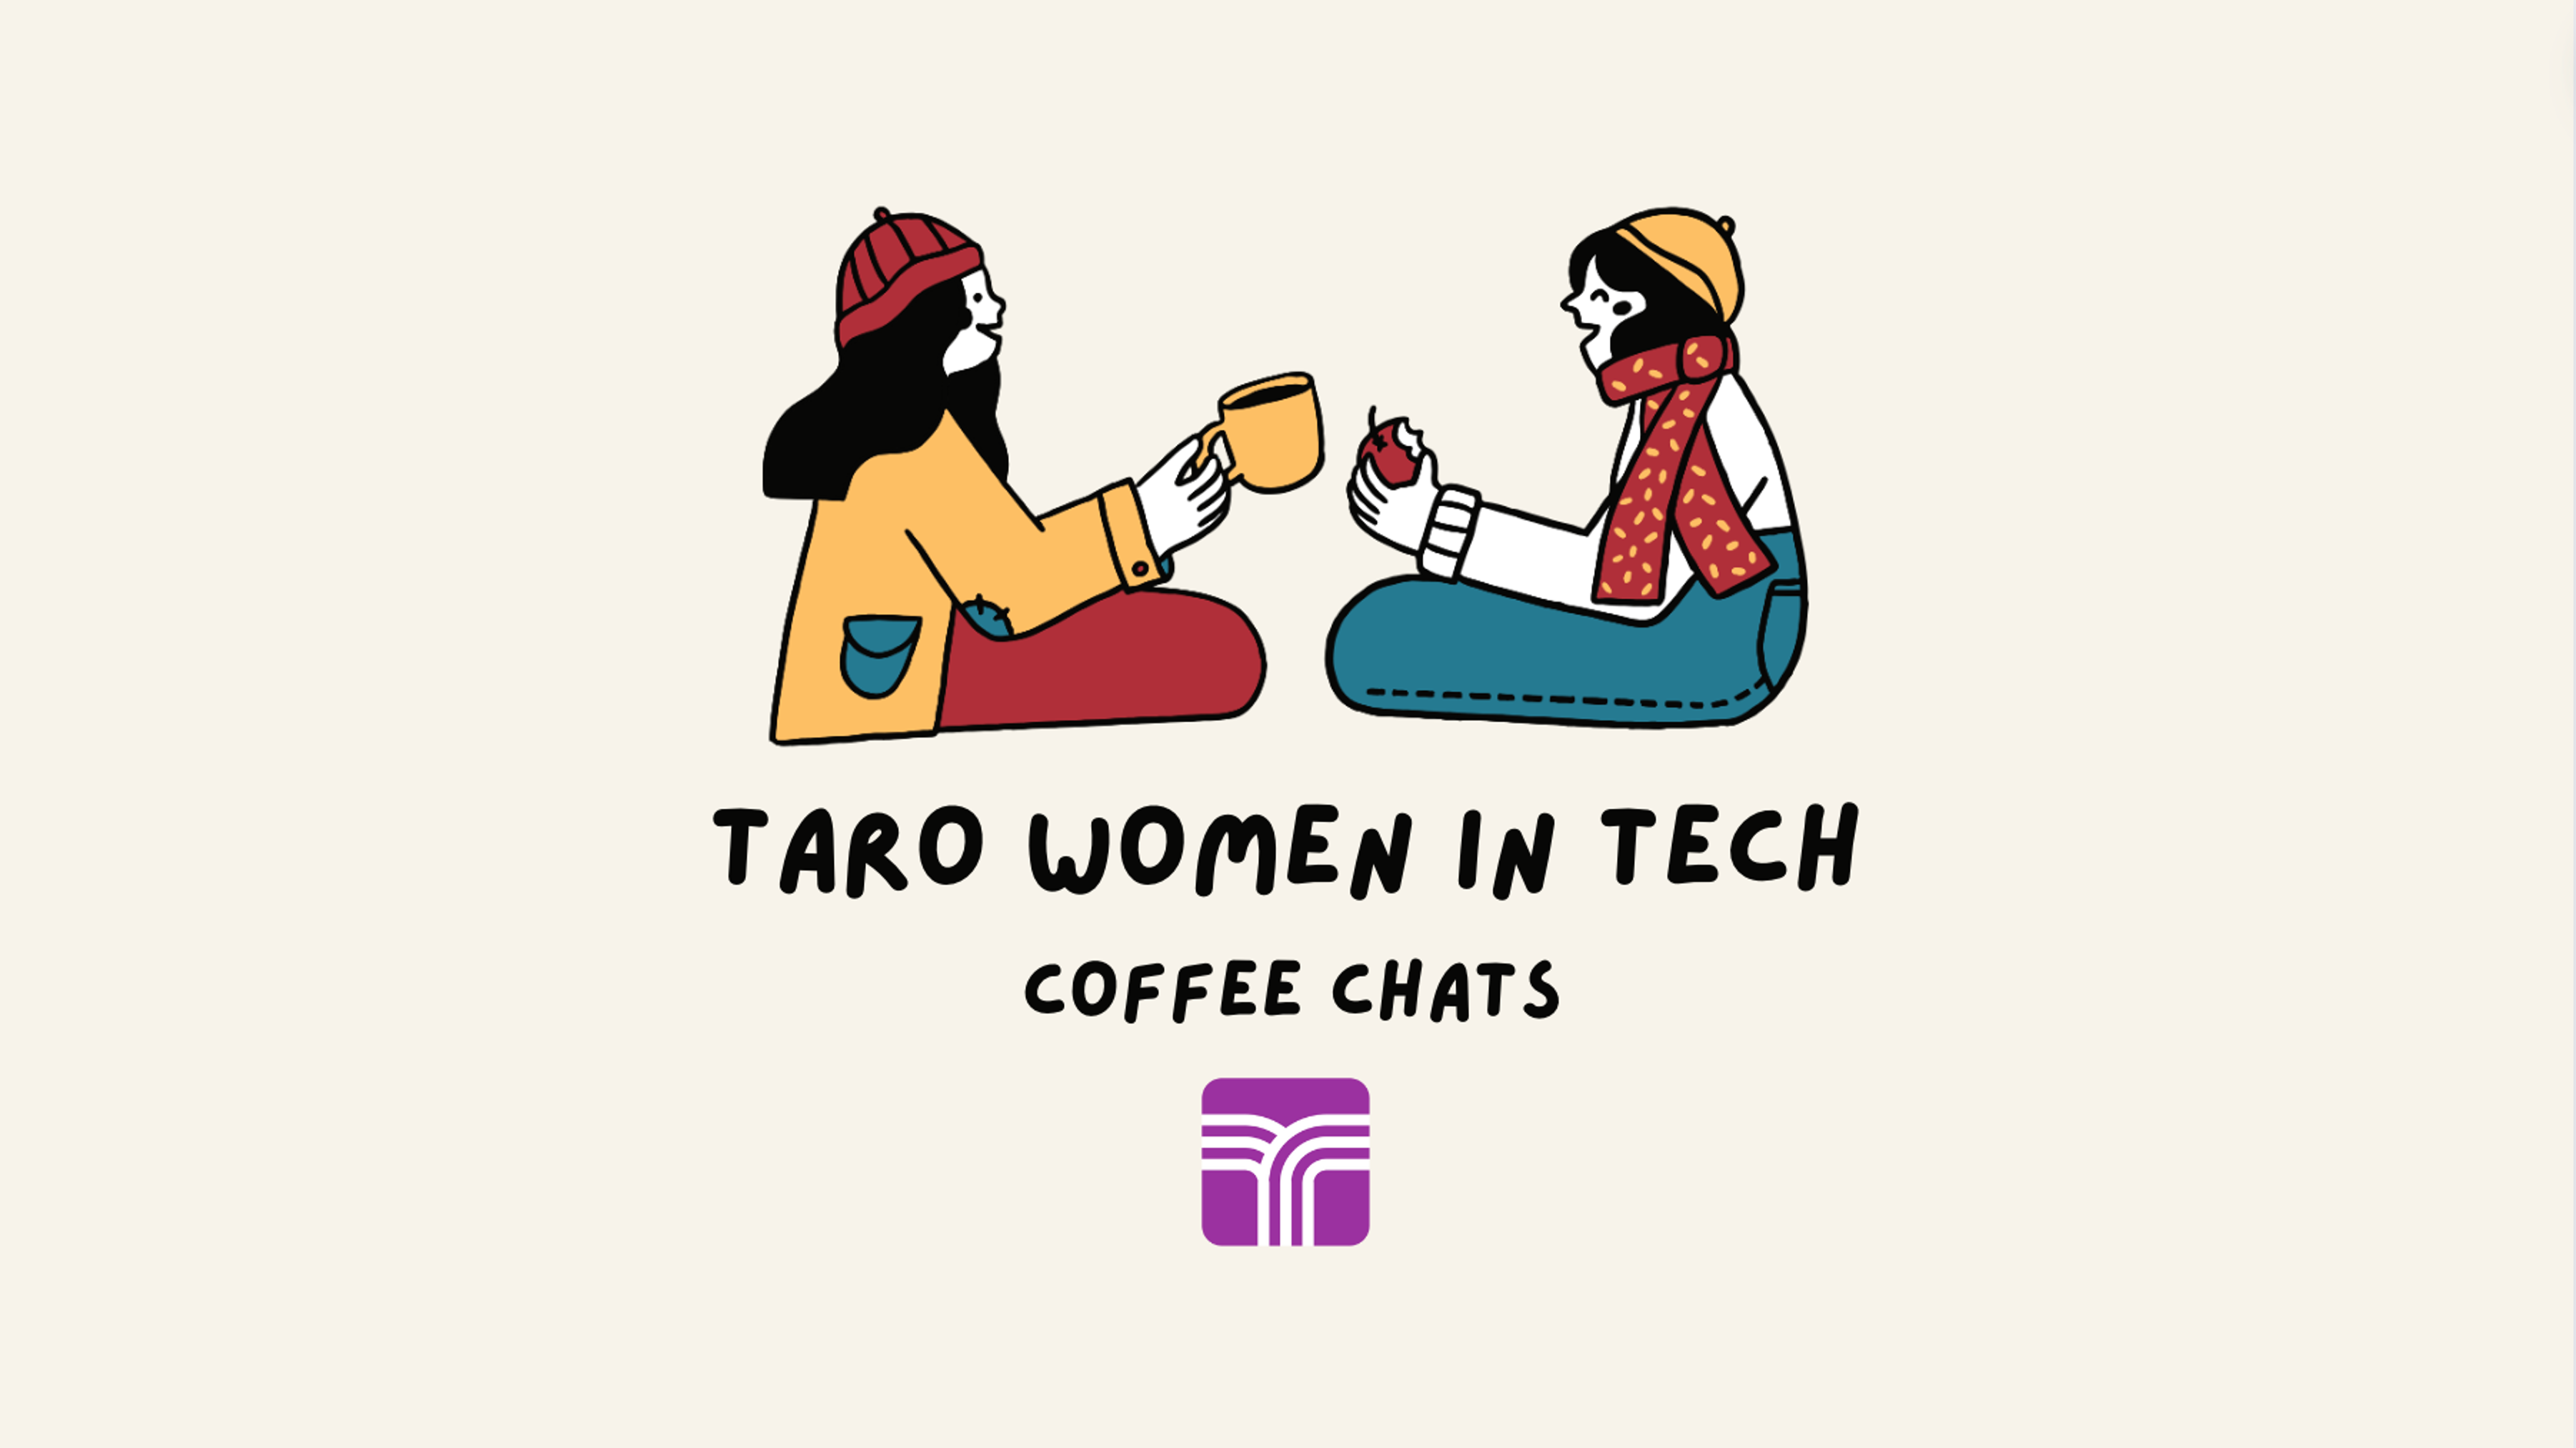 Taro Women in Tech Coffee Chat event